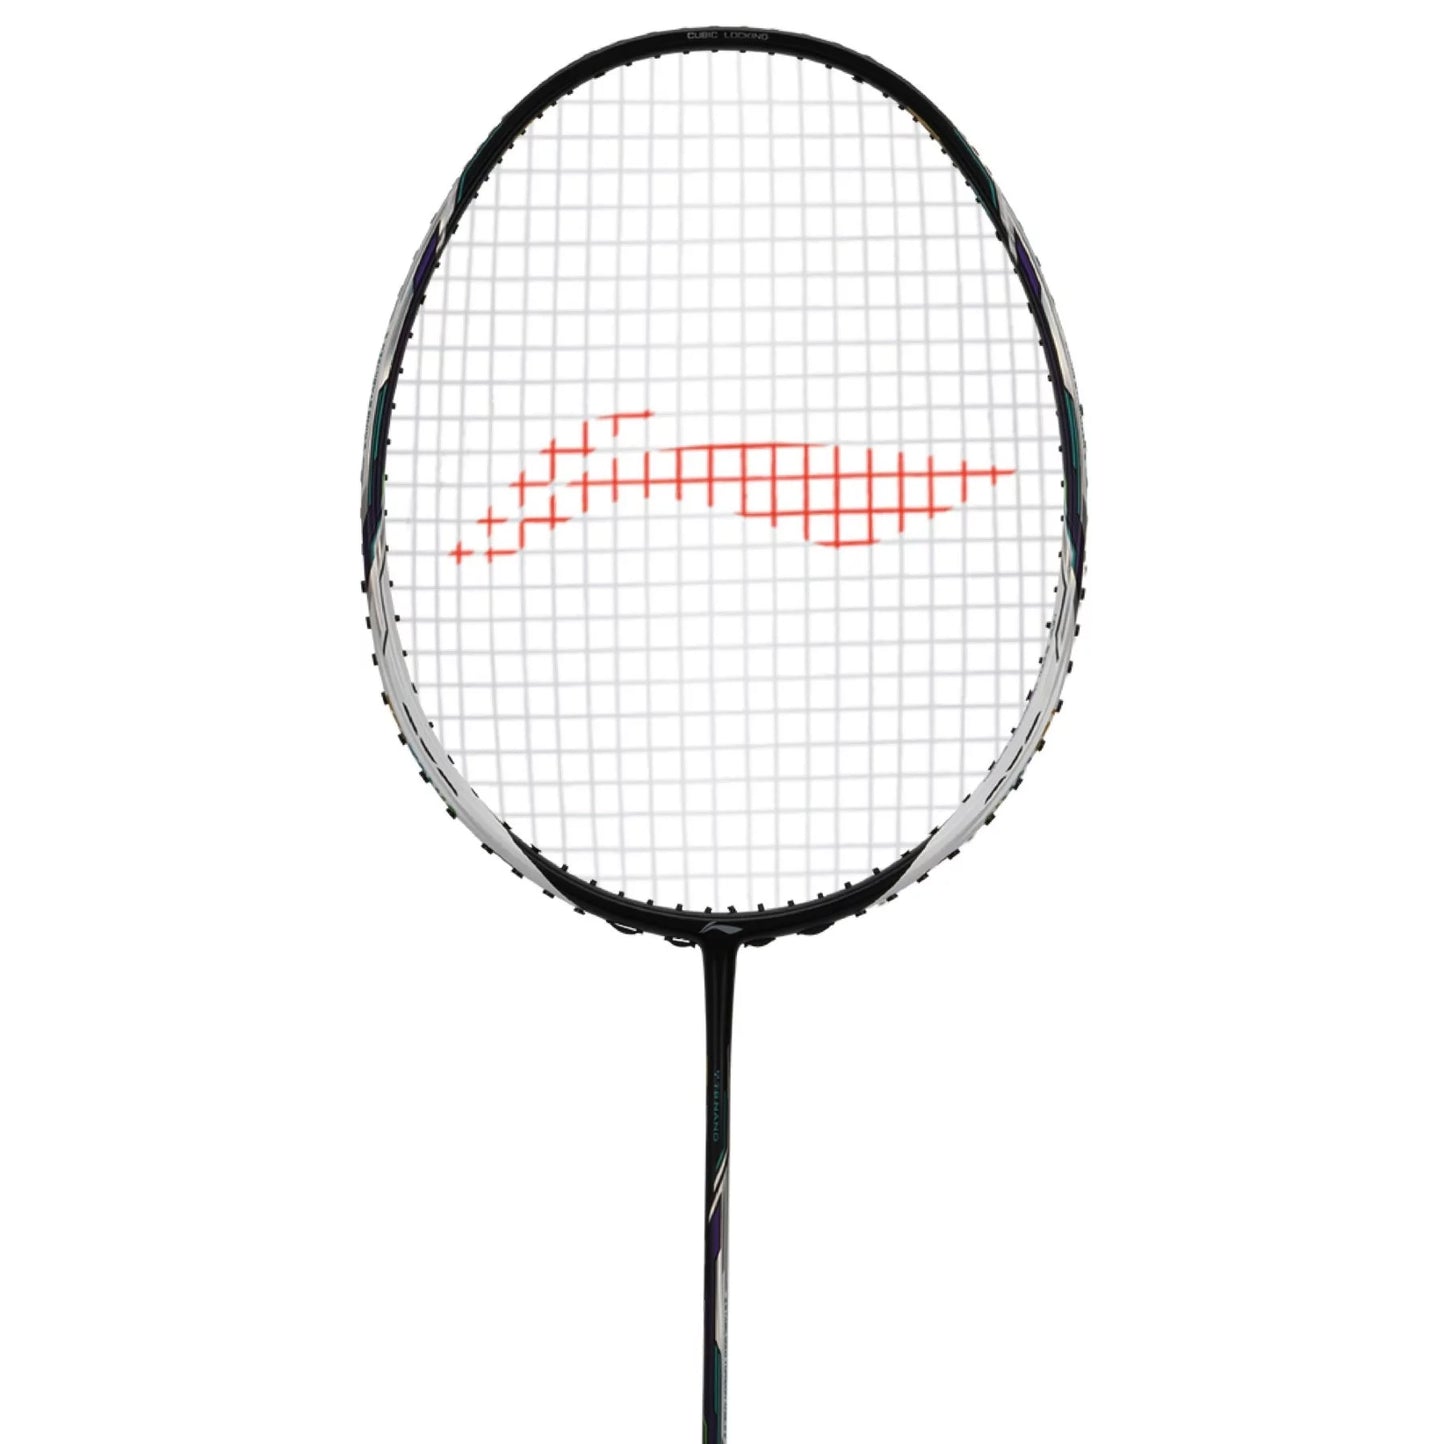 Li-Ning Tectonic 9 Badminton Racquet, Black/White - 83 Grams (4U) - Best Price online Prokicksports.com